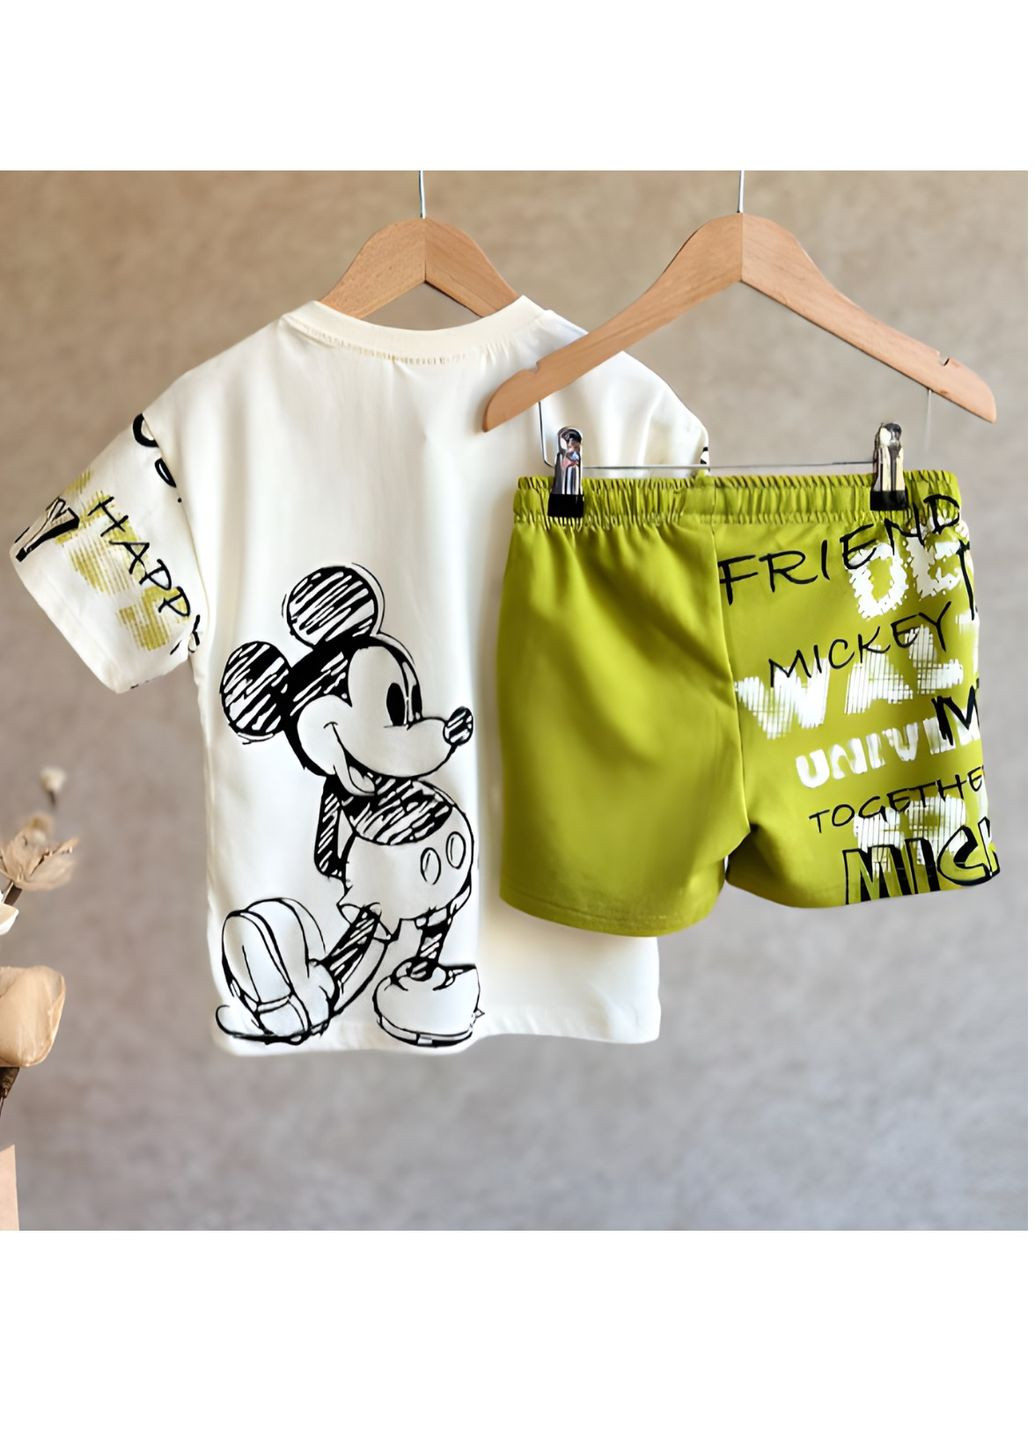 Комплект (футболка, шорты) Mickey Mouse (Микки Маус) TRW1065621242 Disney футболка+шорти (293173636)